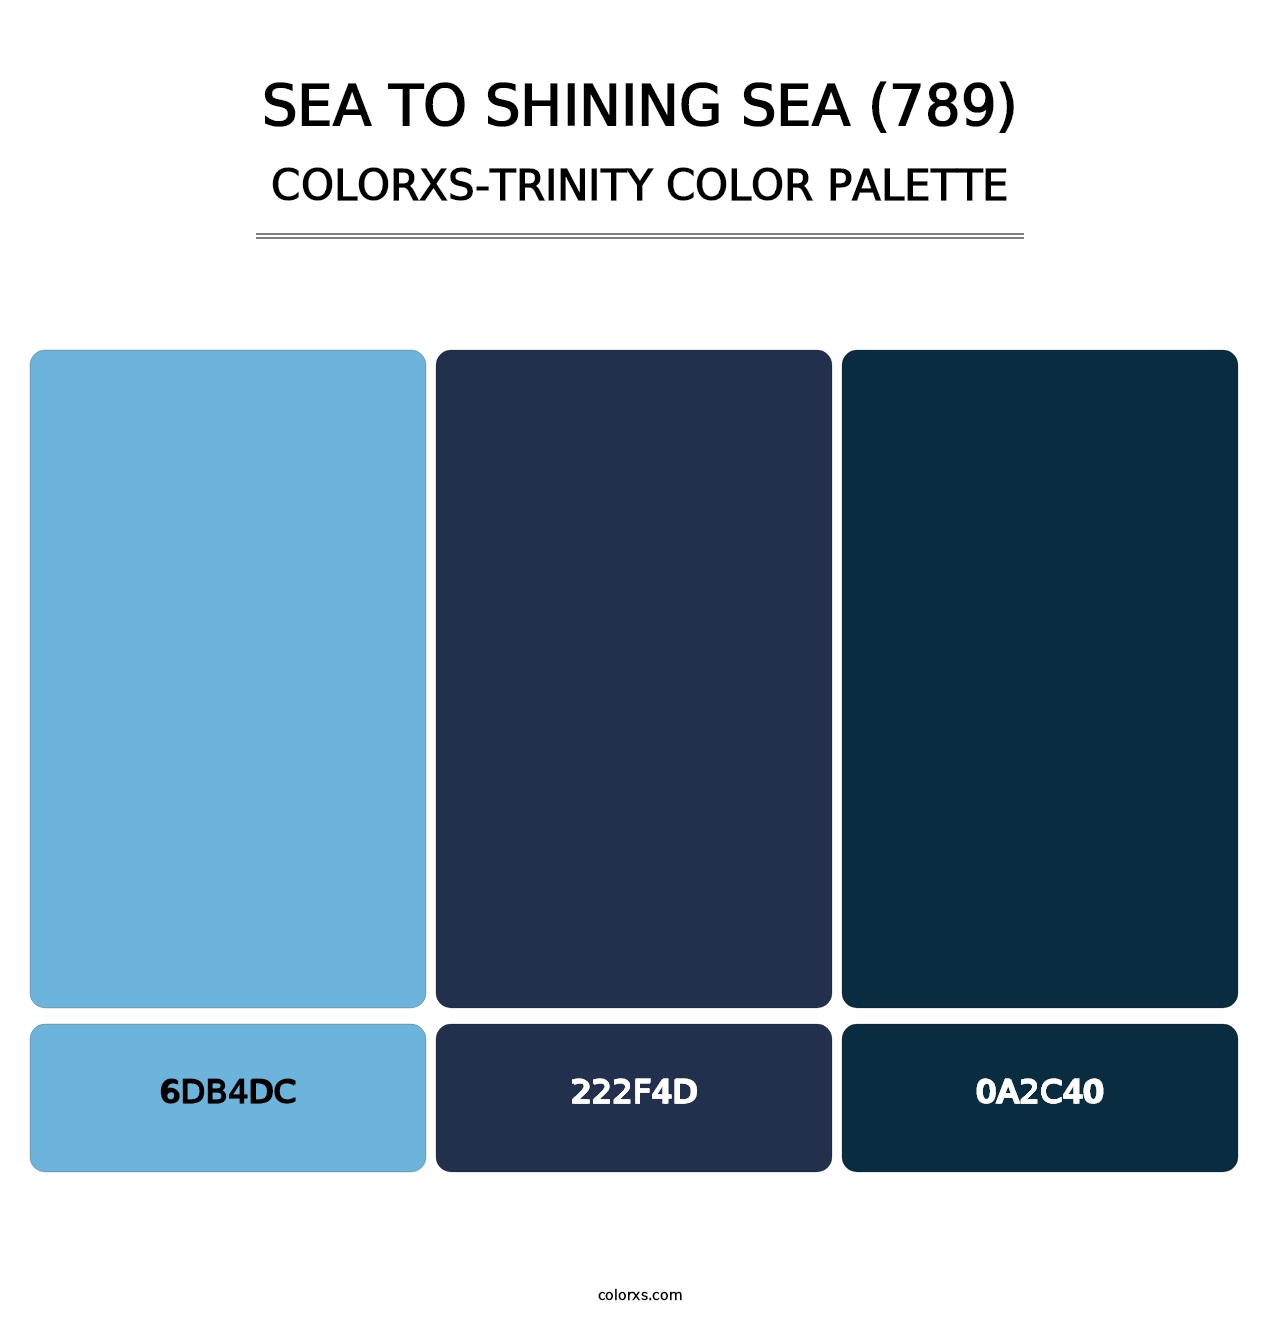 Sea to Shining Sea (789) - Colorxs Trinity Palette